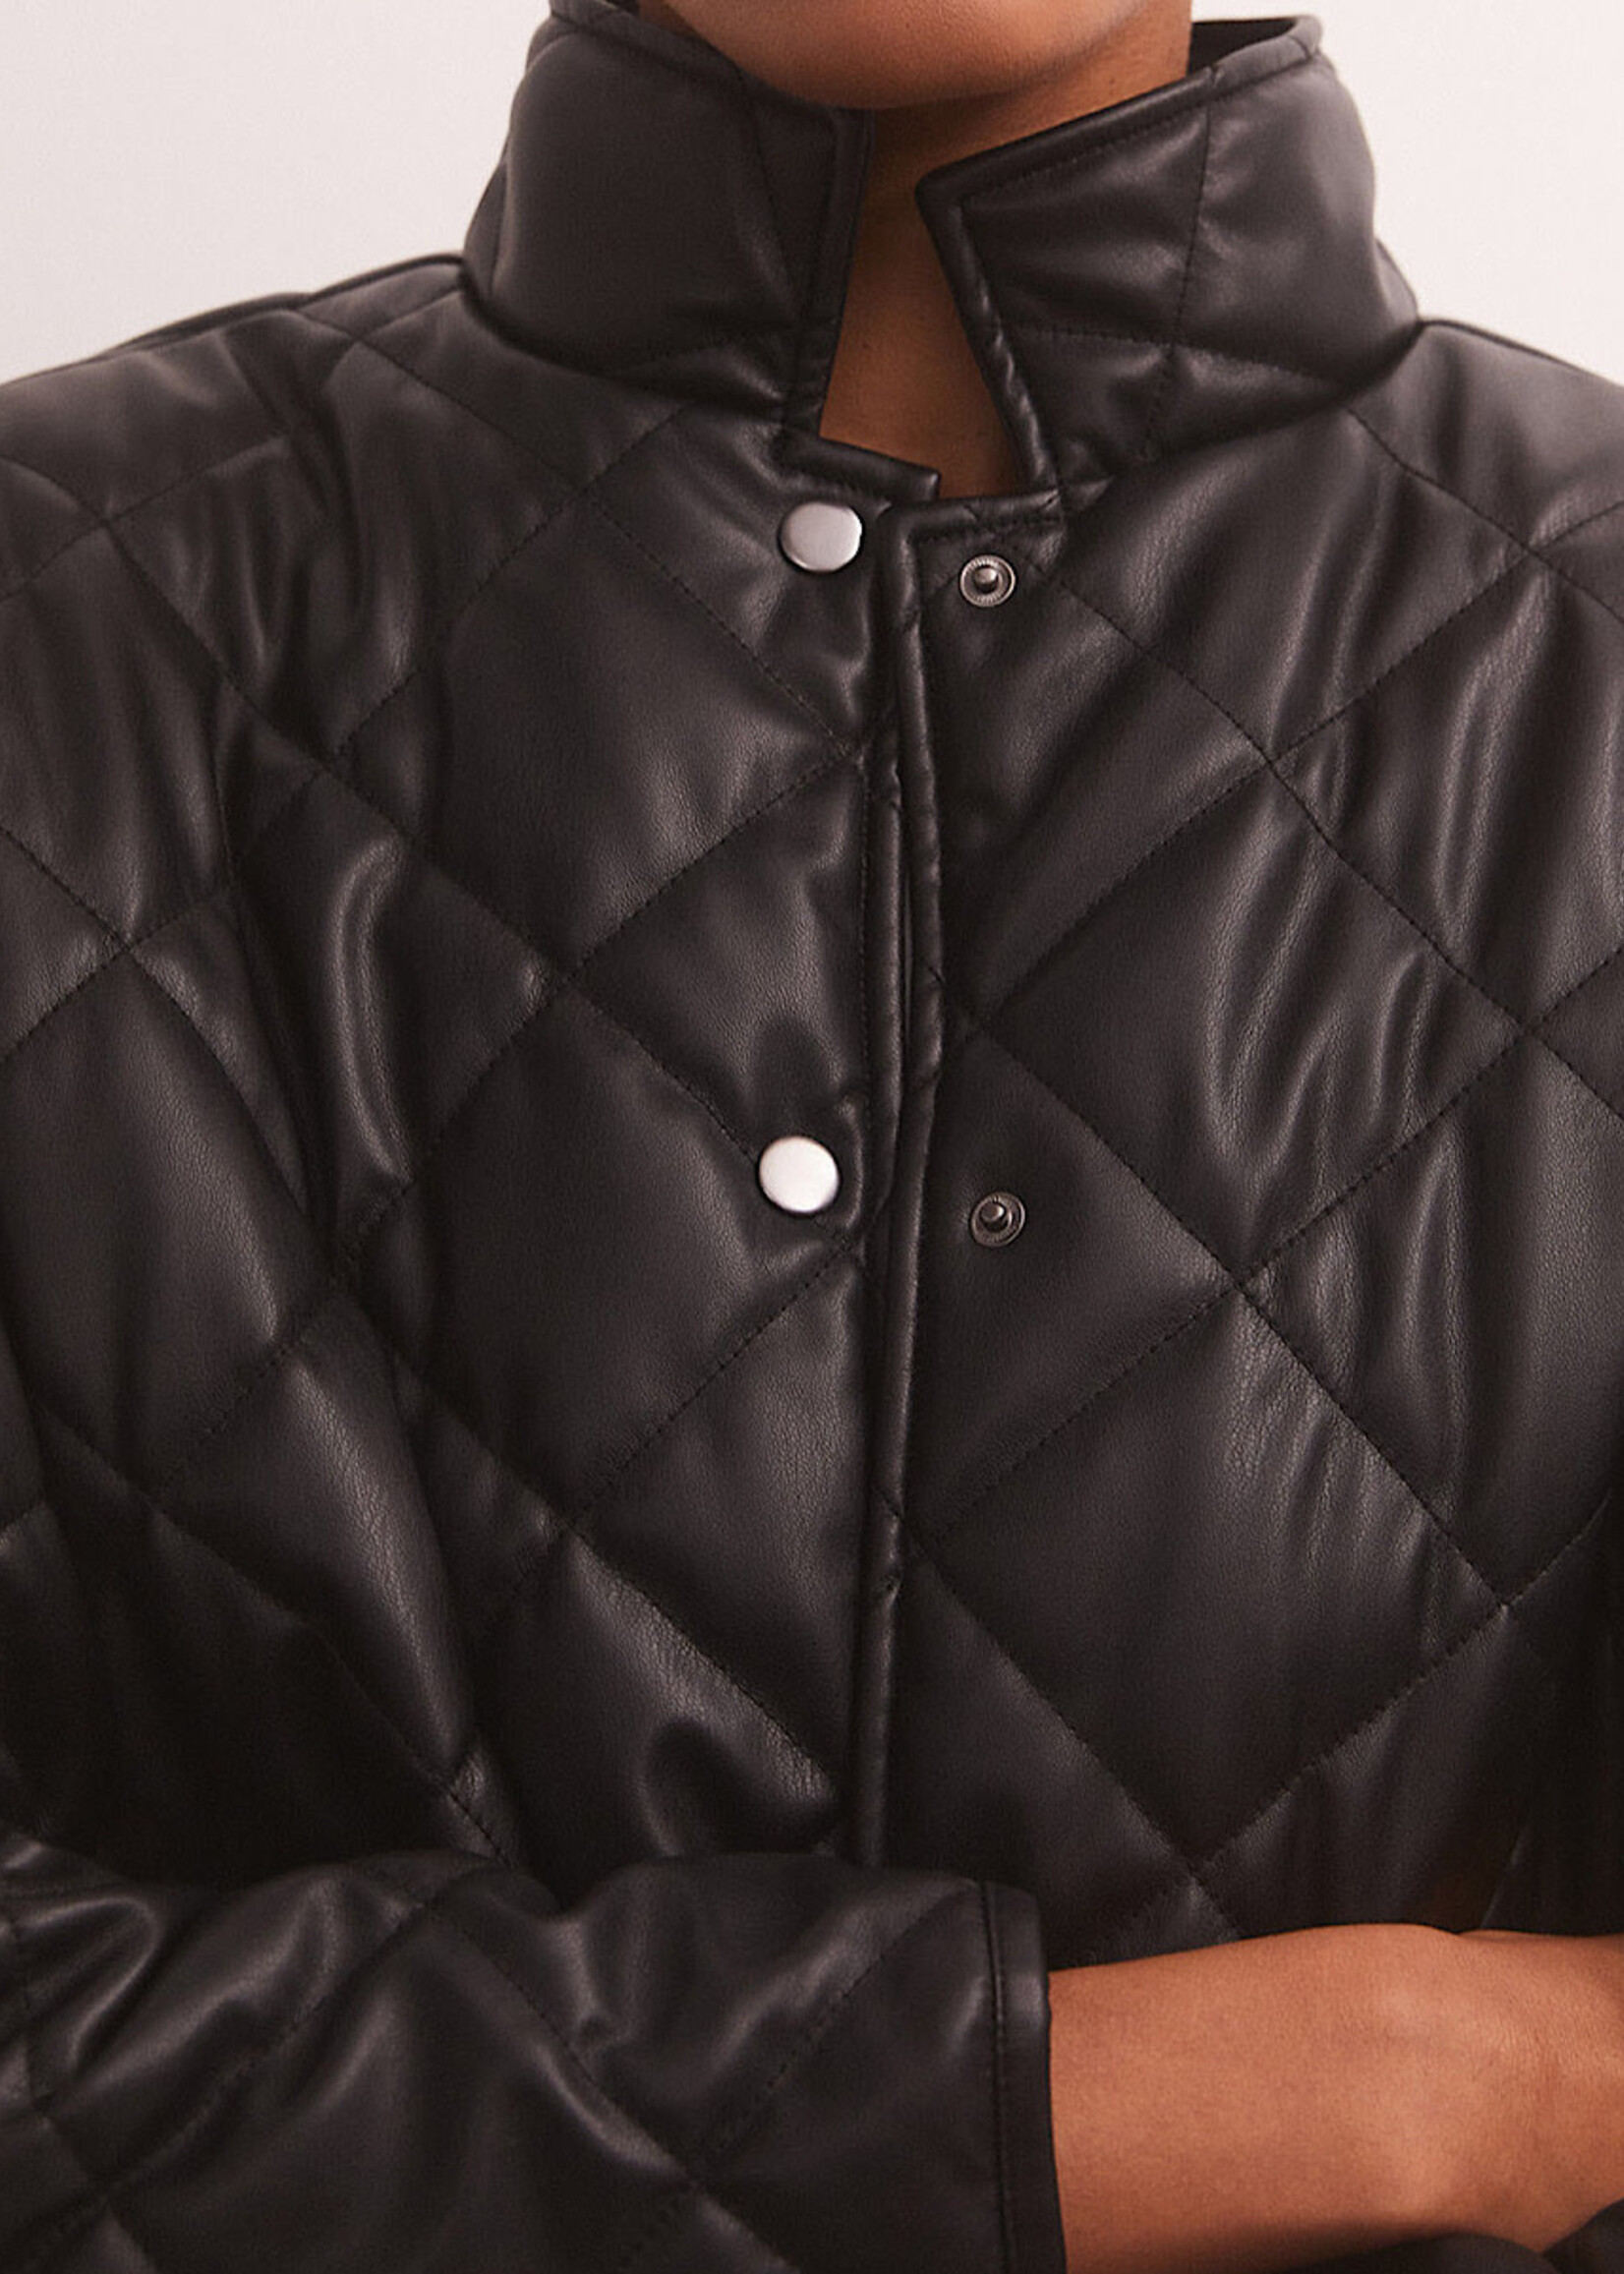 Z Supply Z Supply Heritage Faux Leather Jacket Black